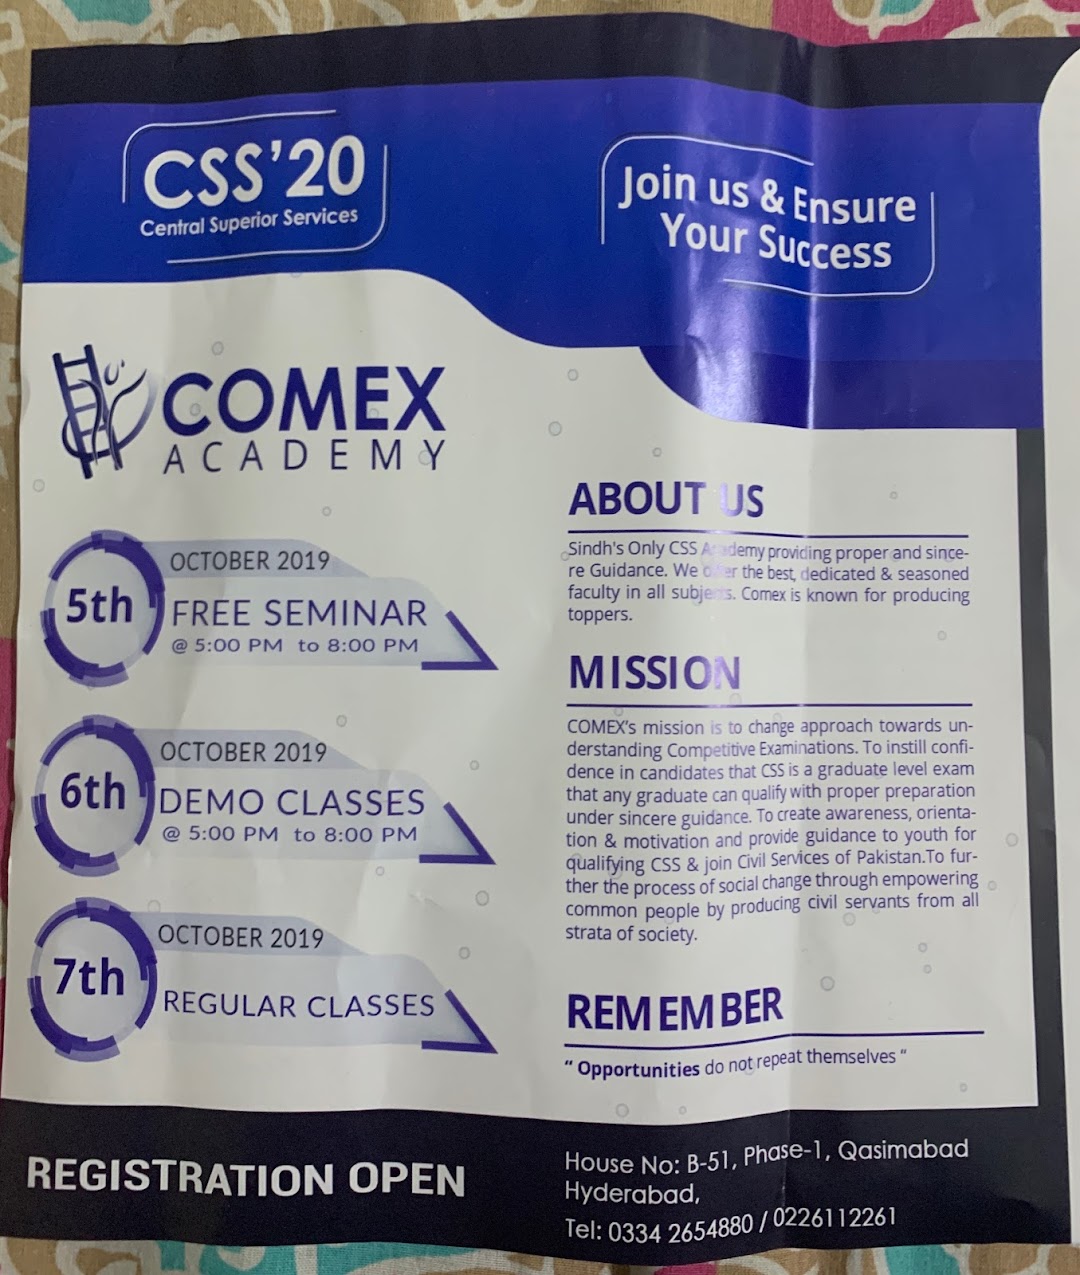 CSS Comex Academy 